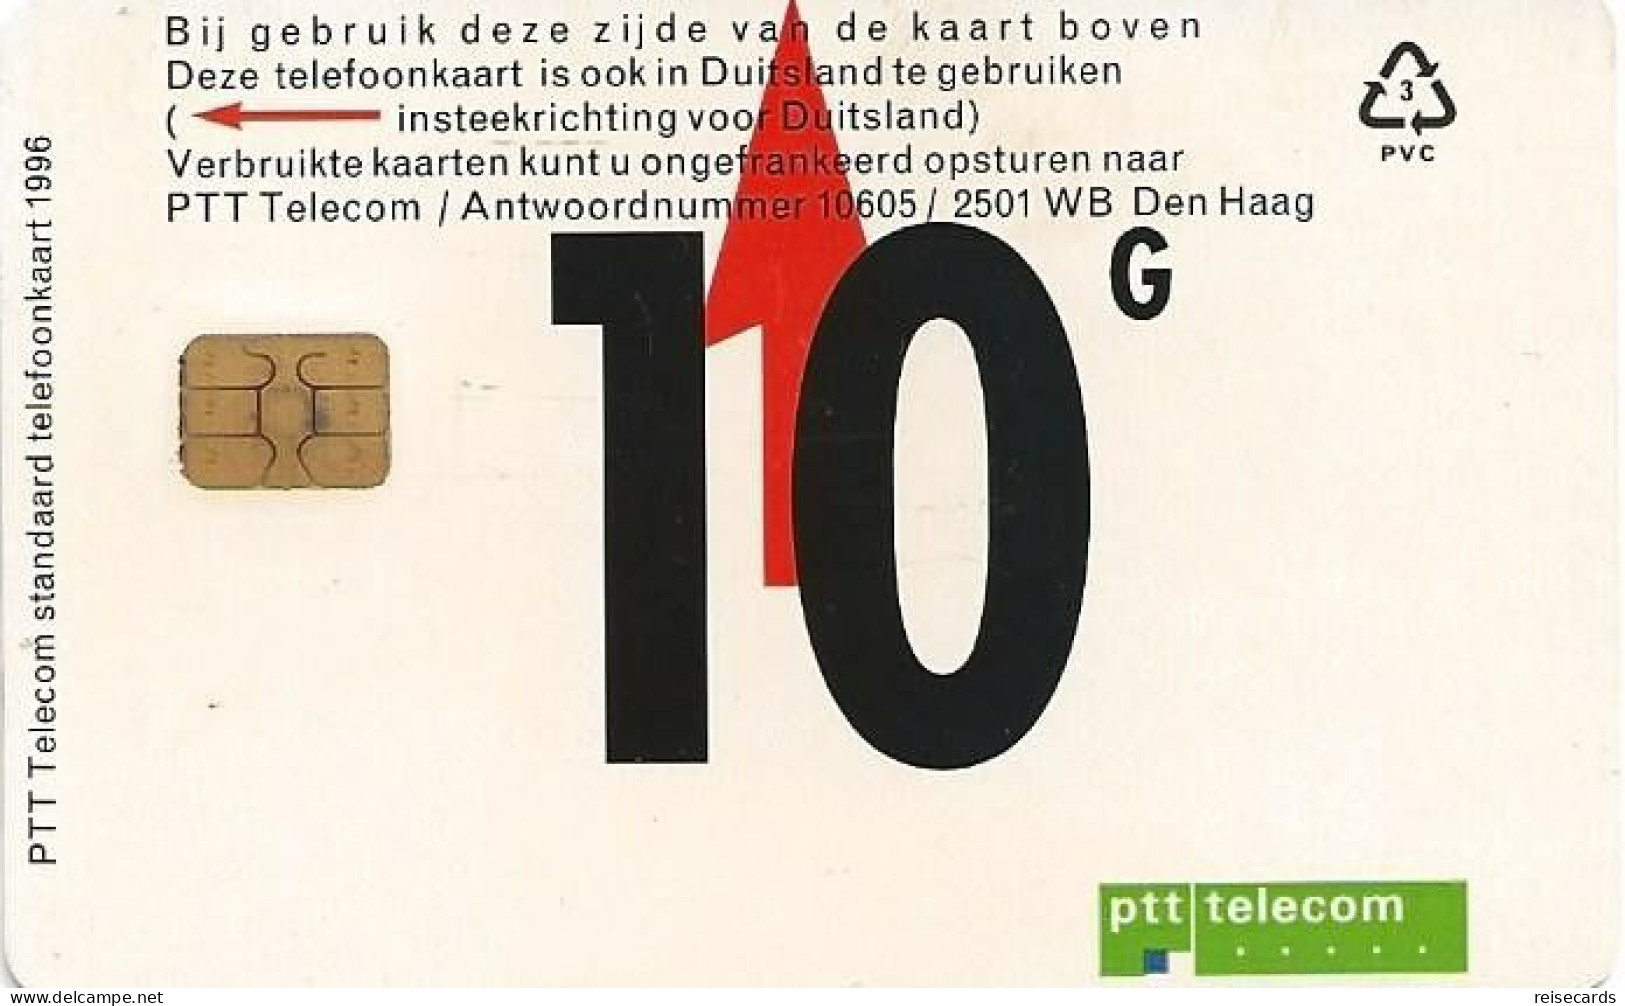 Netherlands: Ptt Telecom - 1994 Numbers - Public